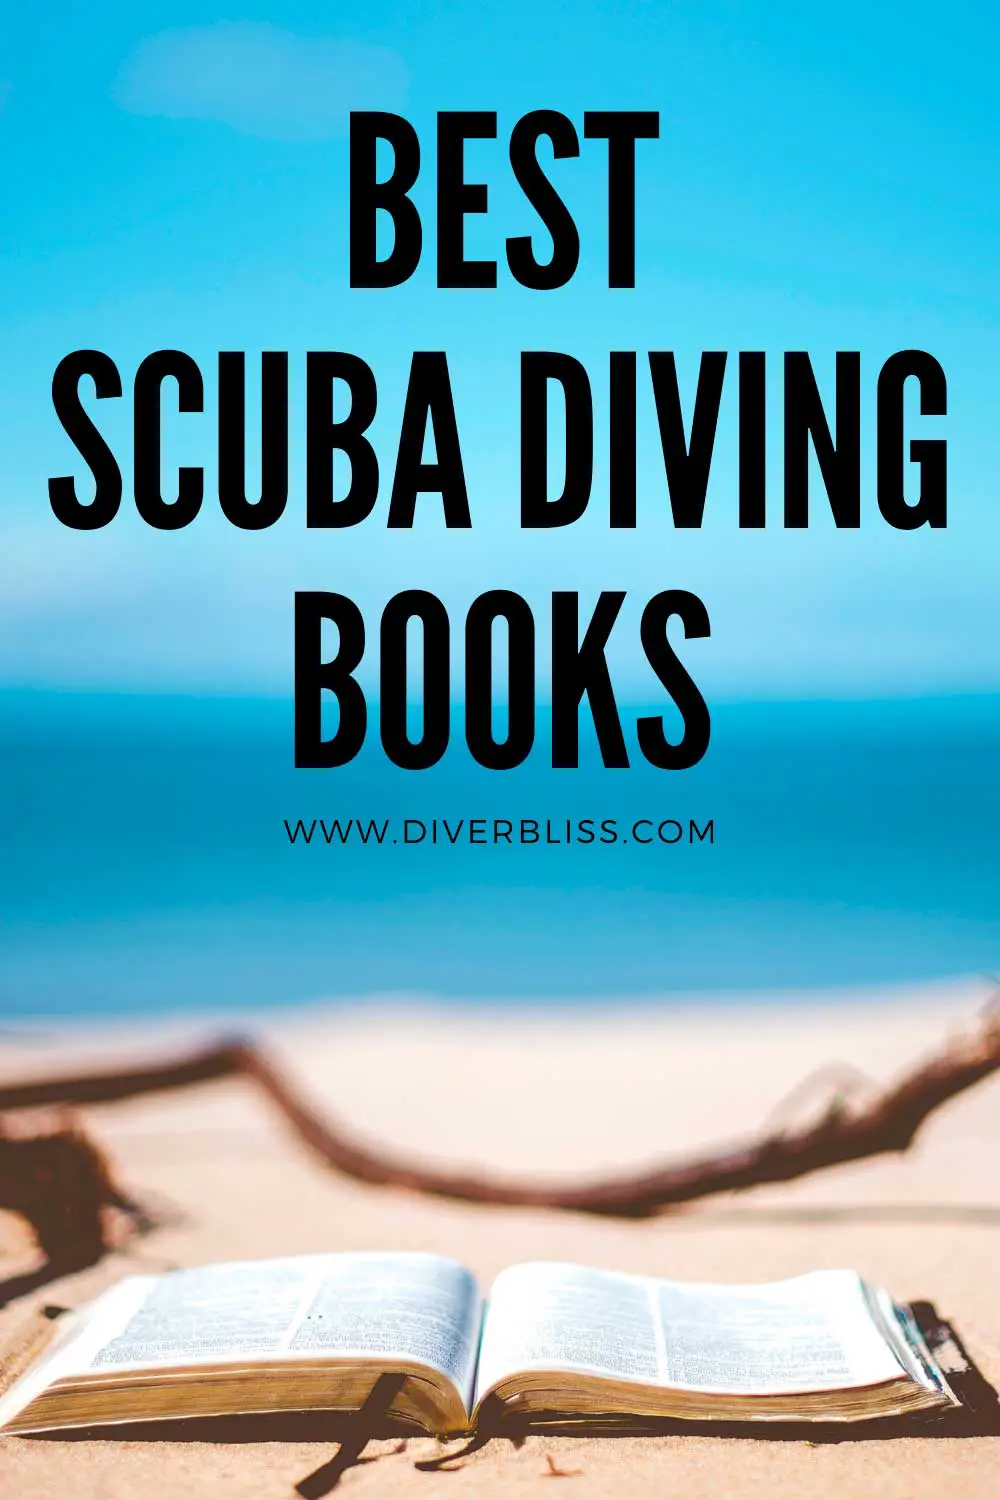 Best scuba diving books